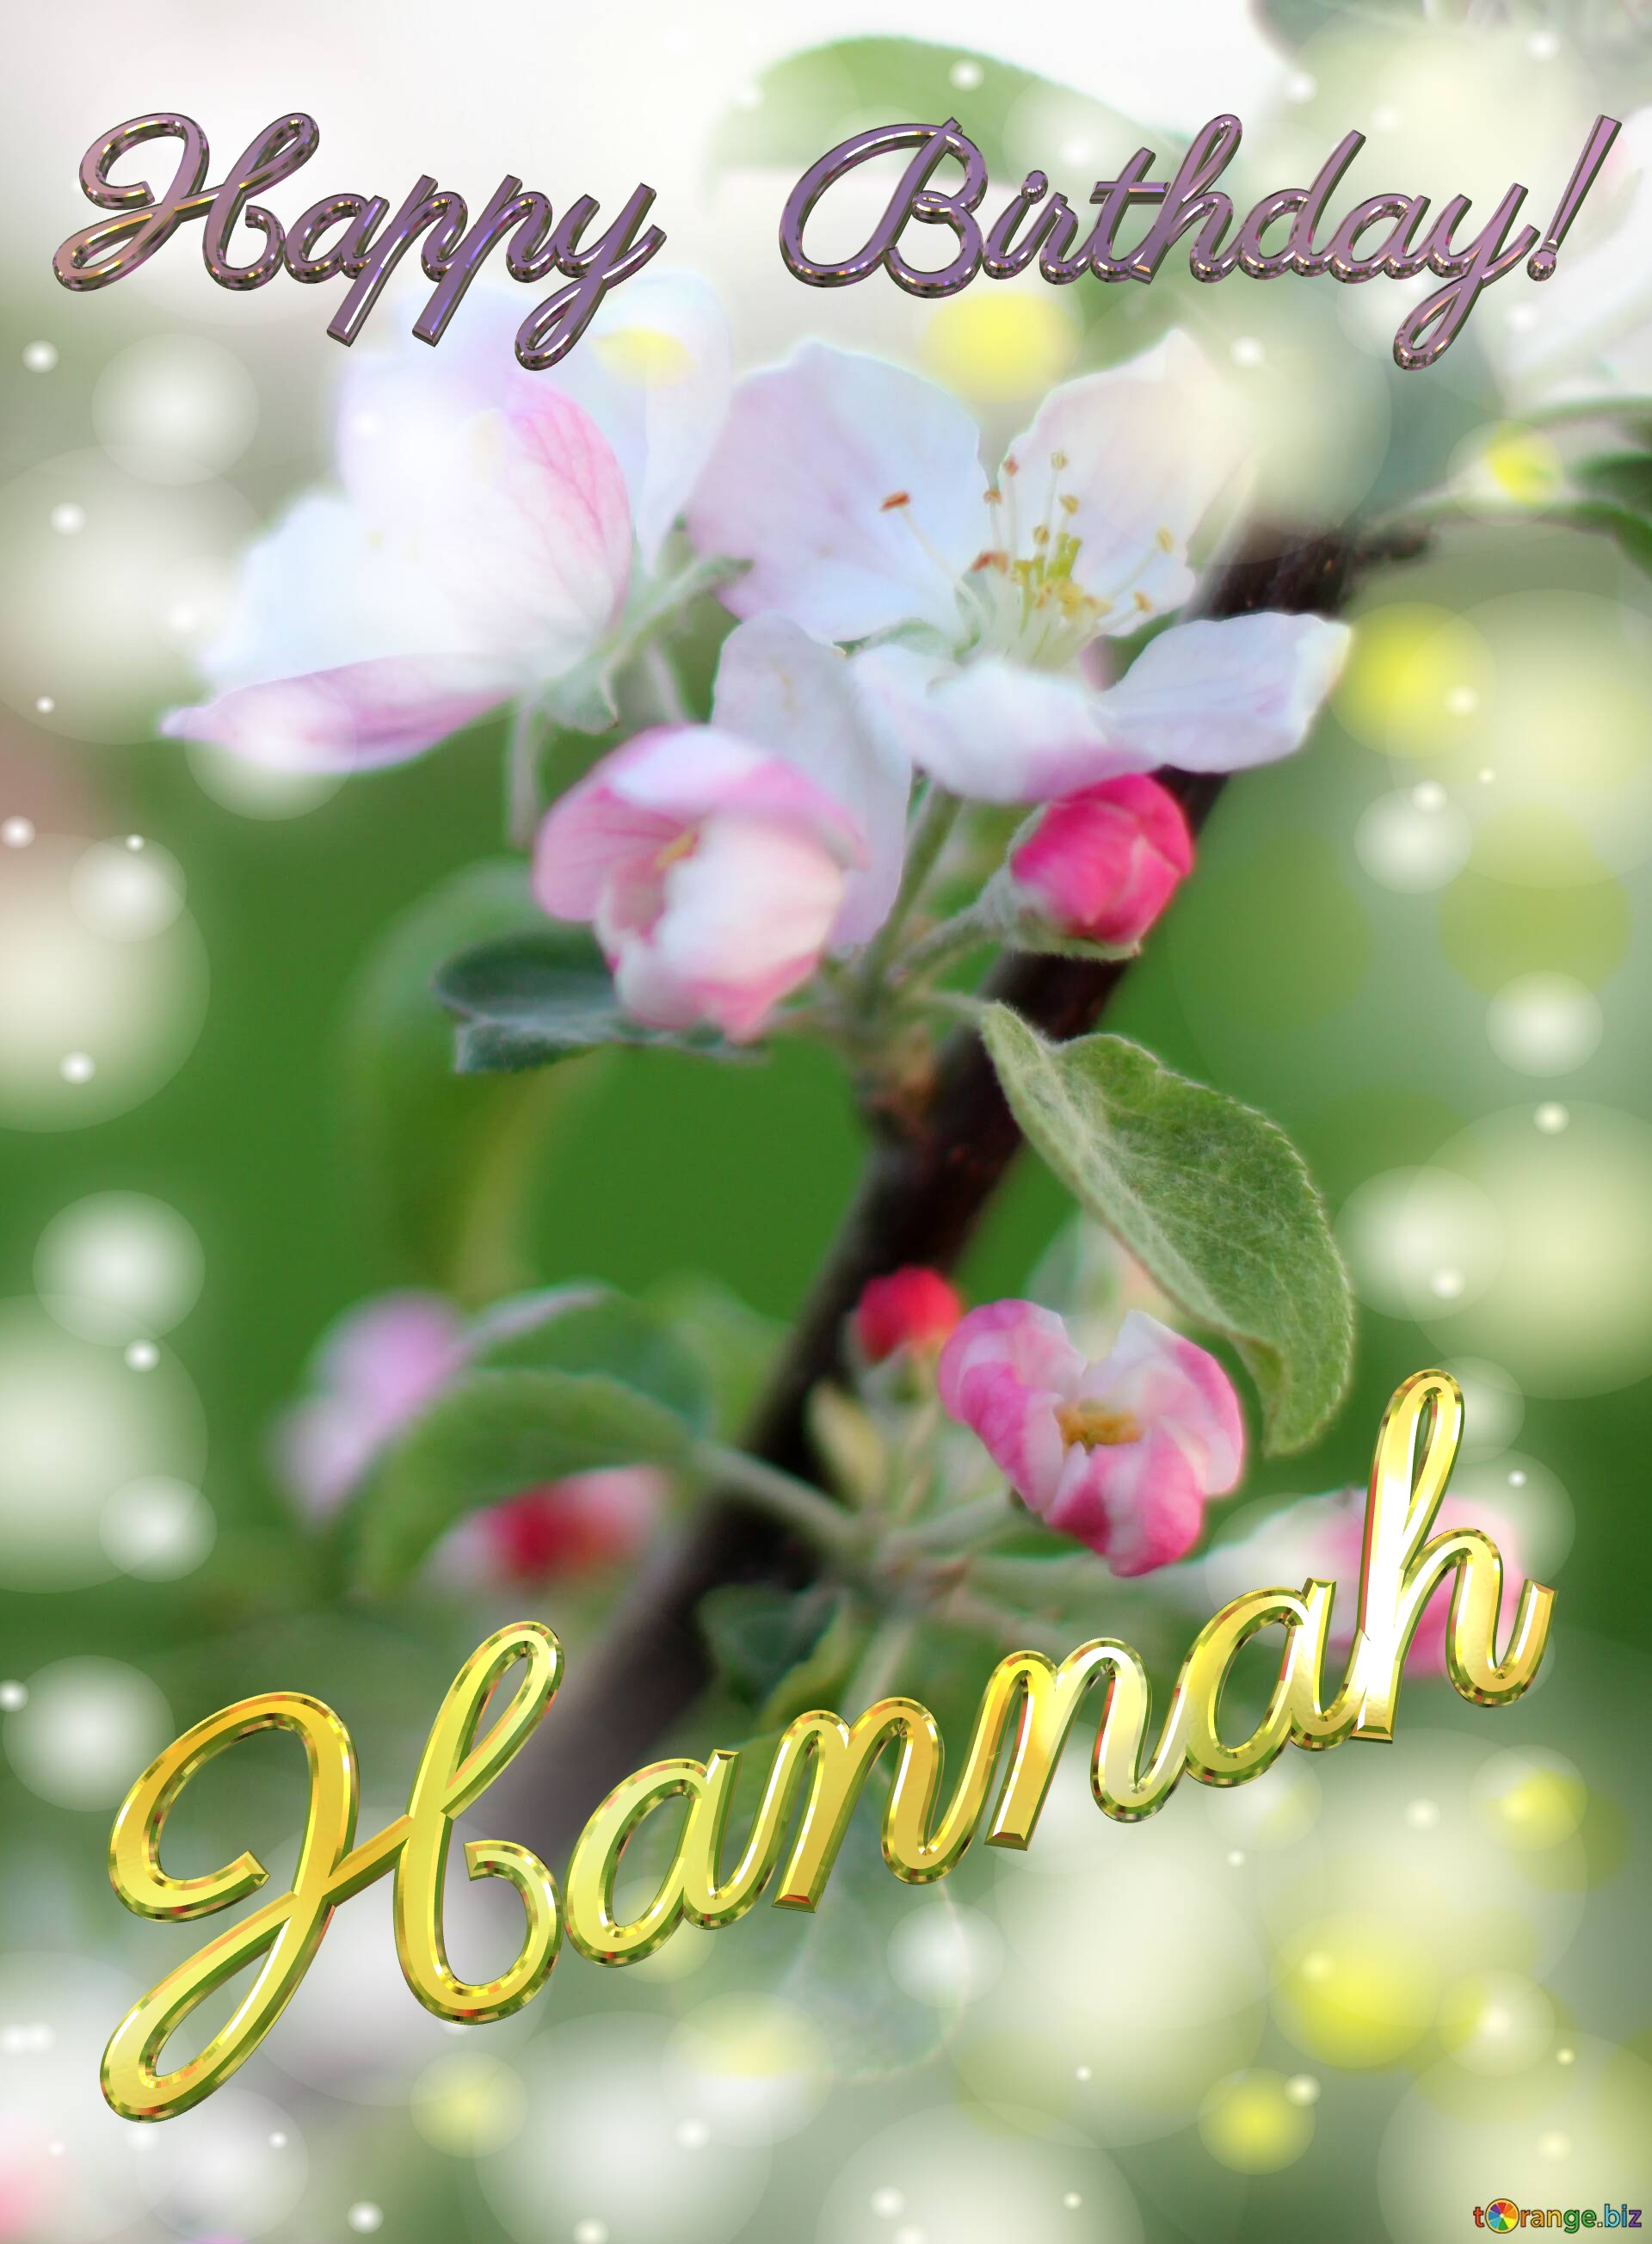 Hannah Happy Birthday! Flowers of the Apple-tree background №0